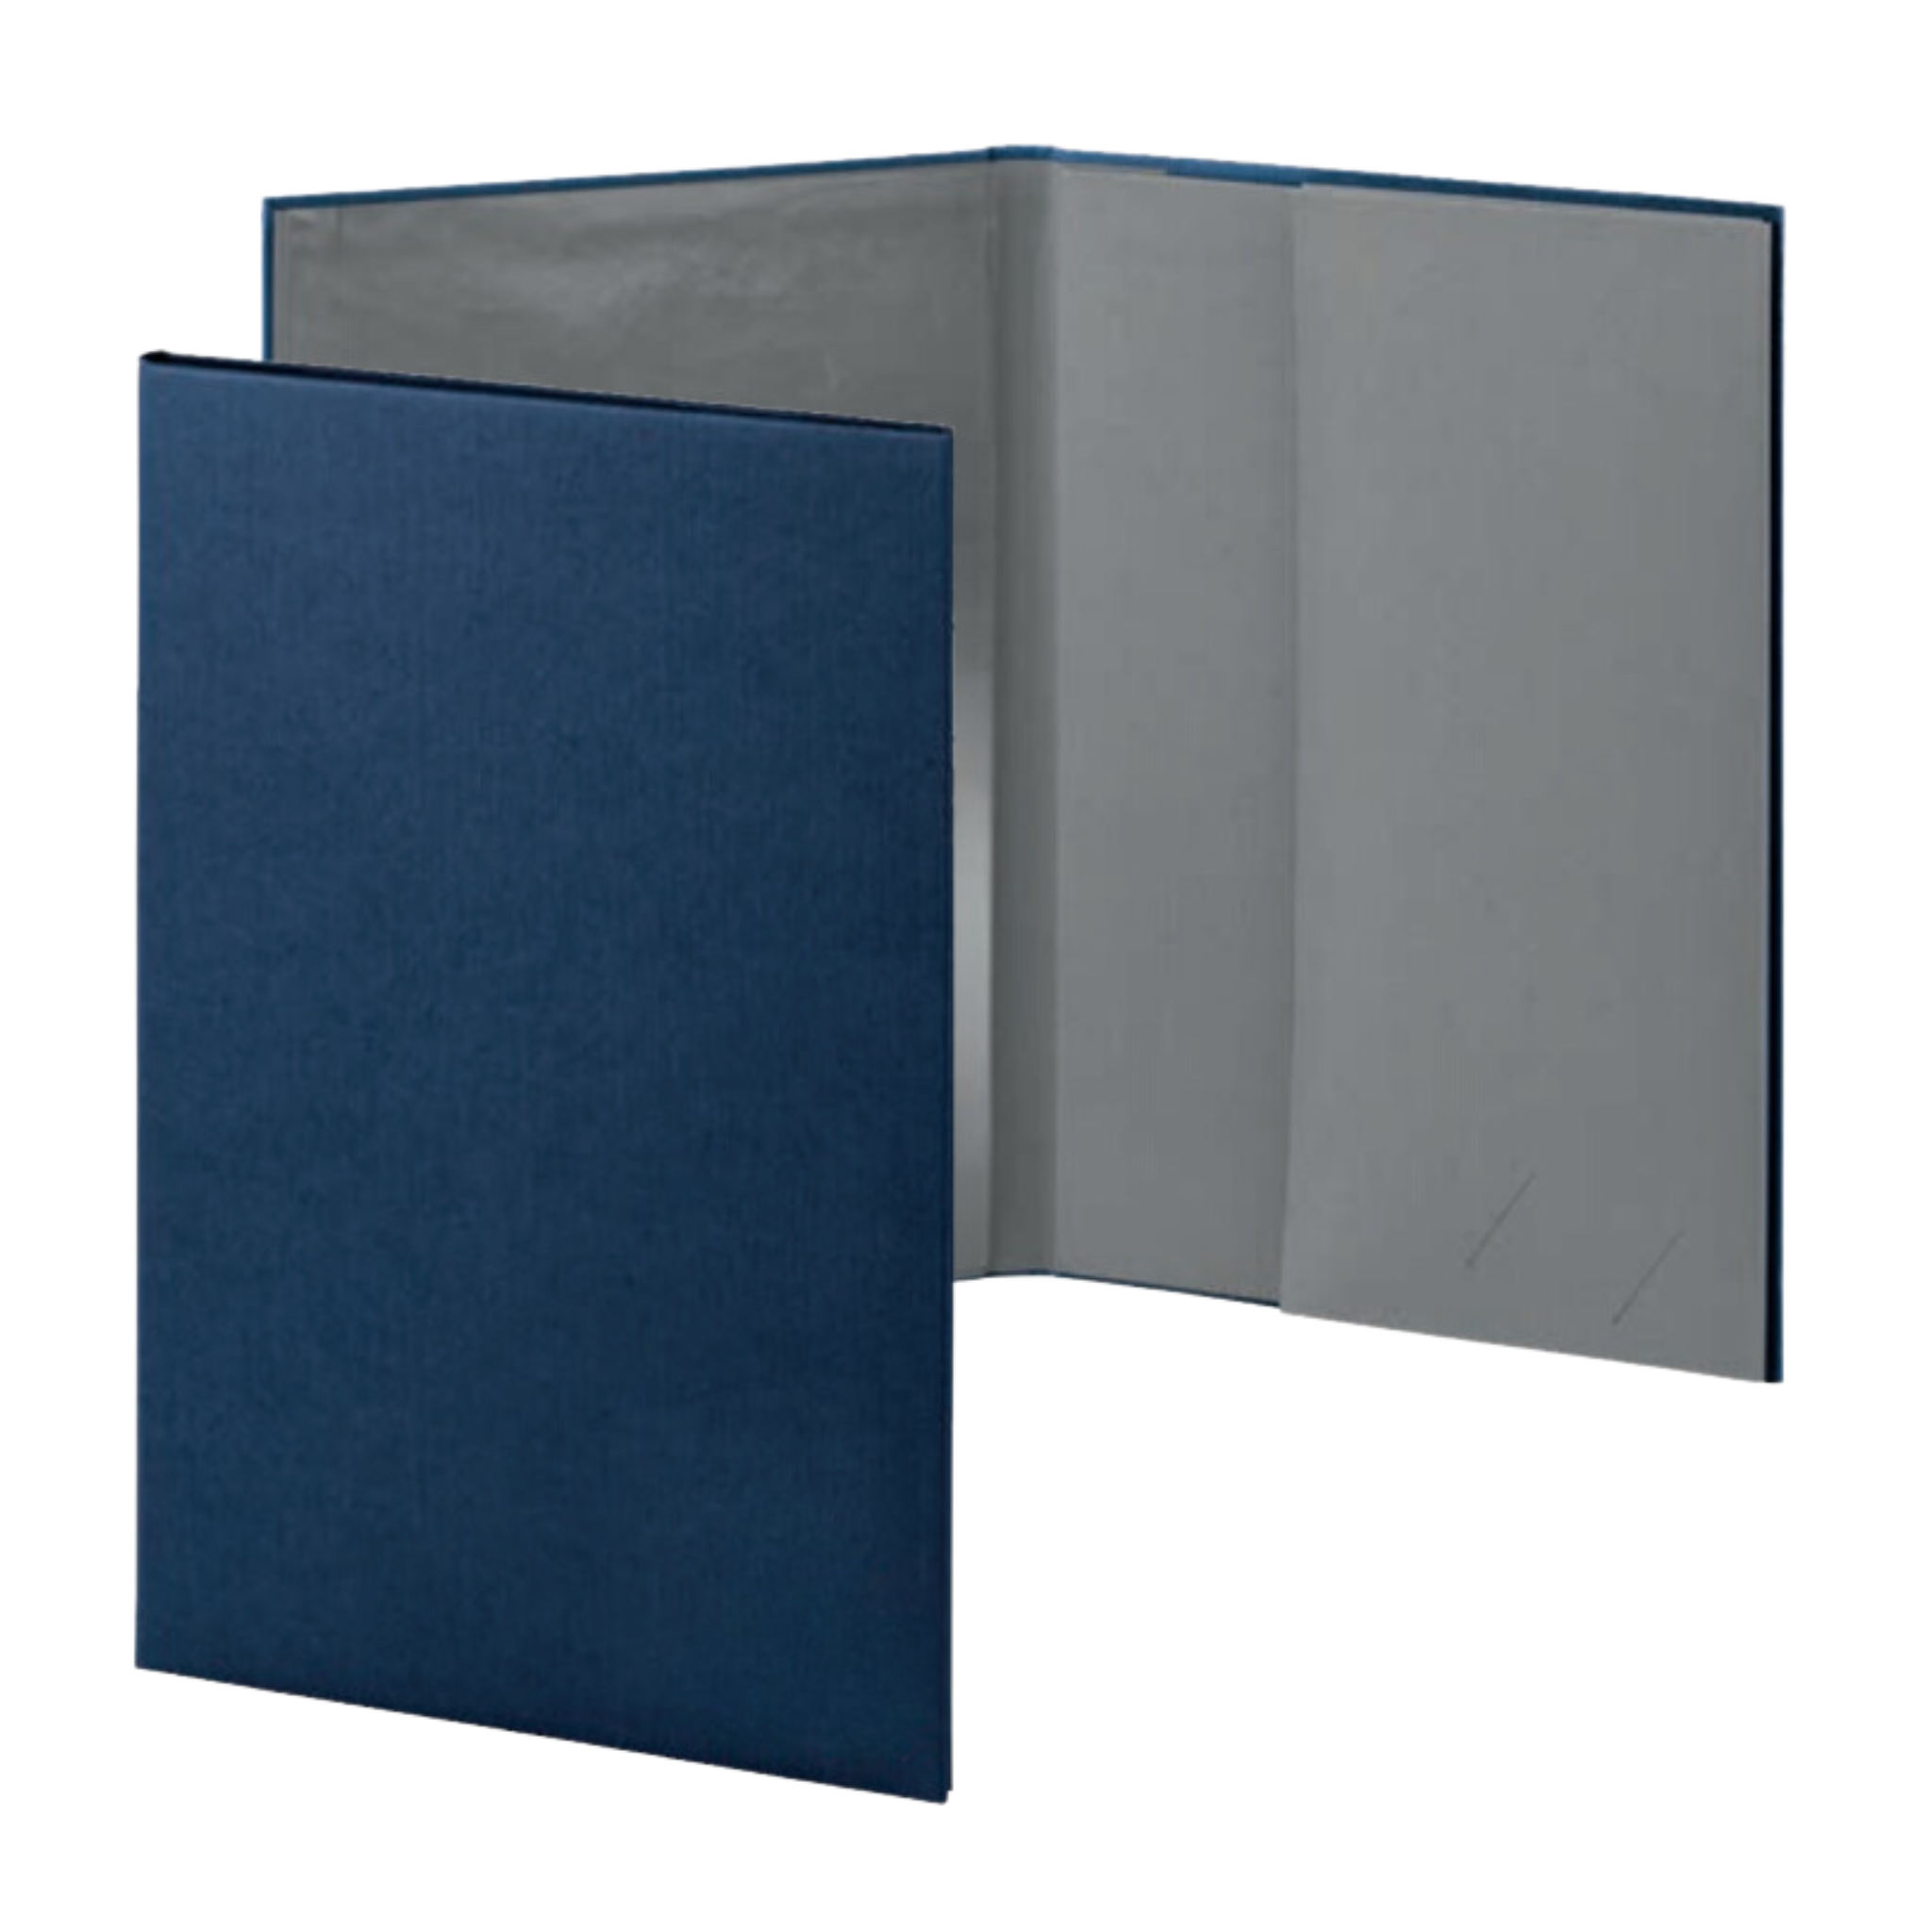 Rössler handover folder DIN A4 slip-in pocket 5 pieces